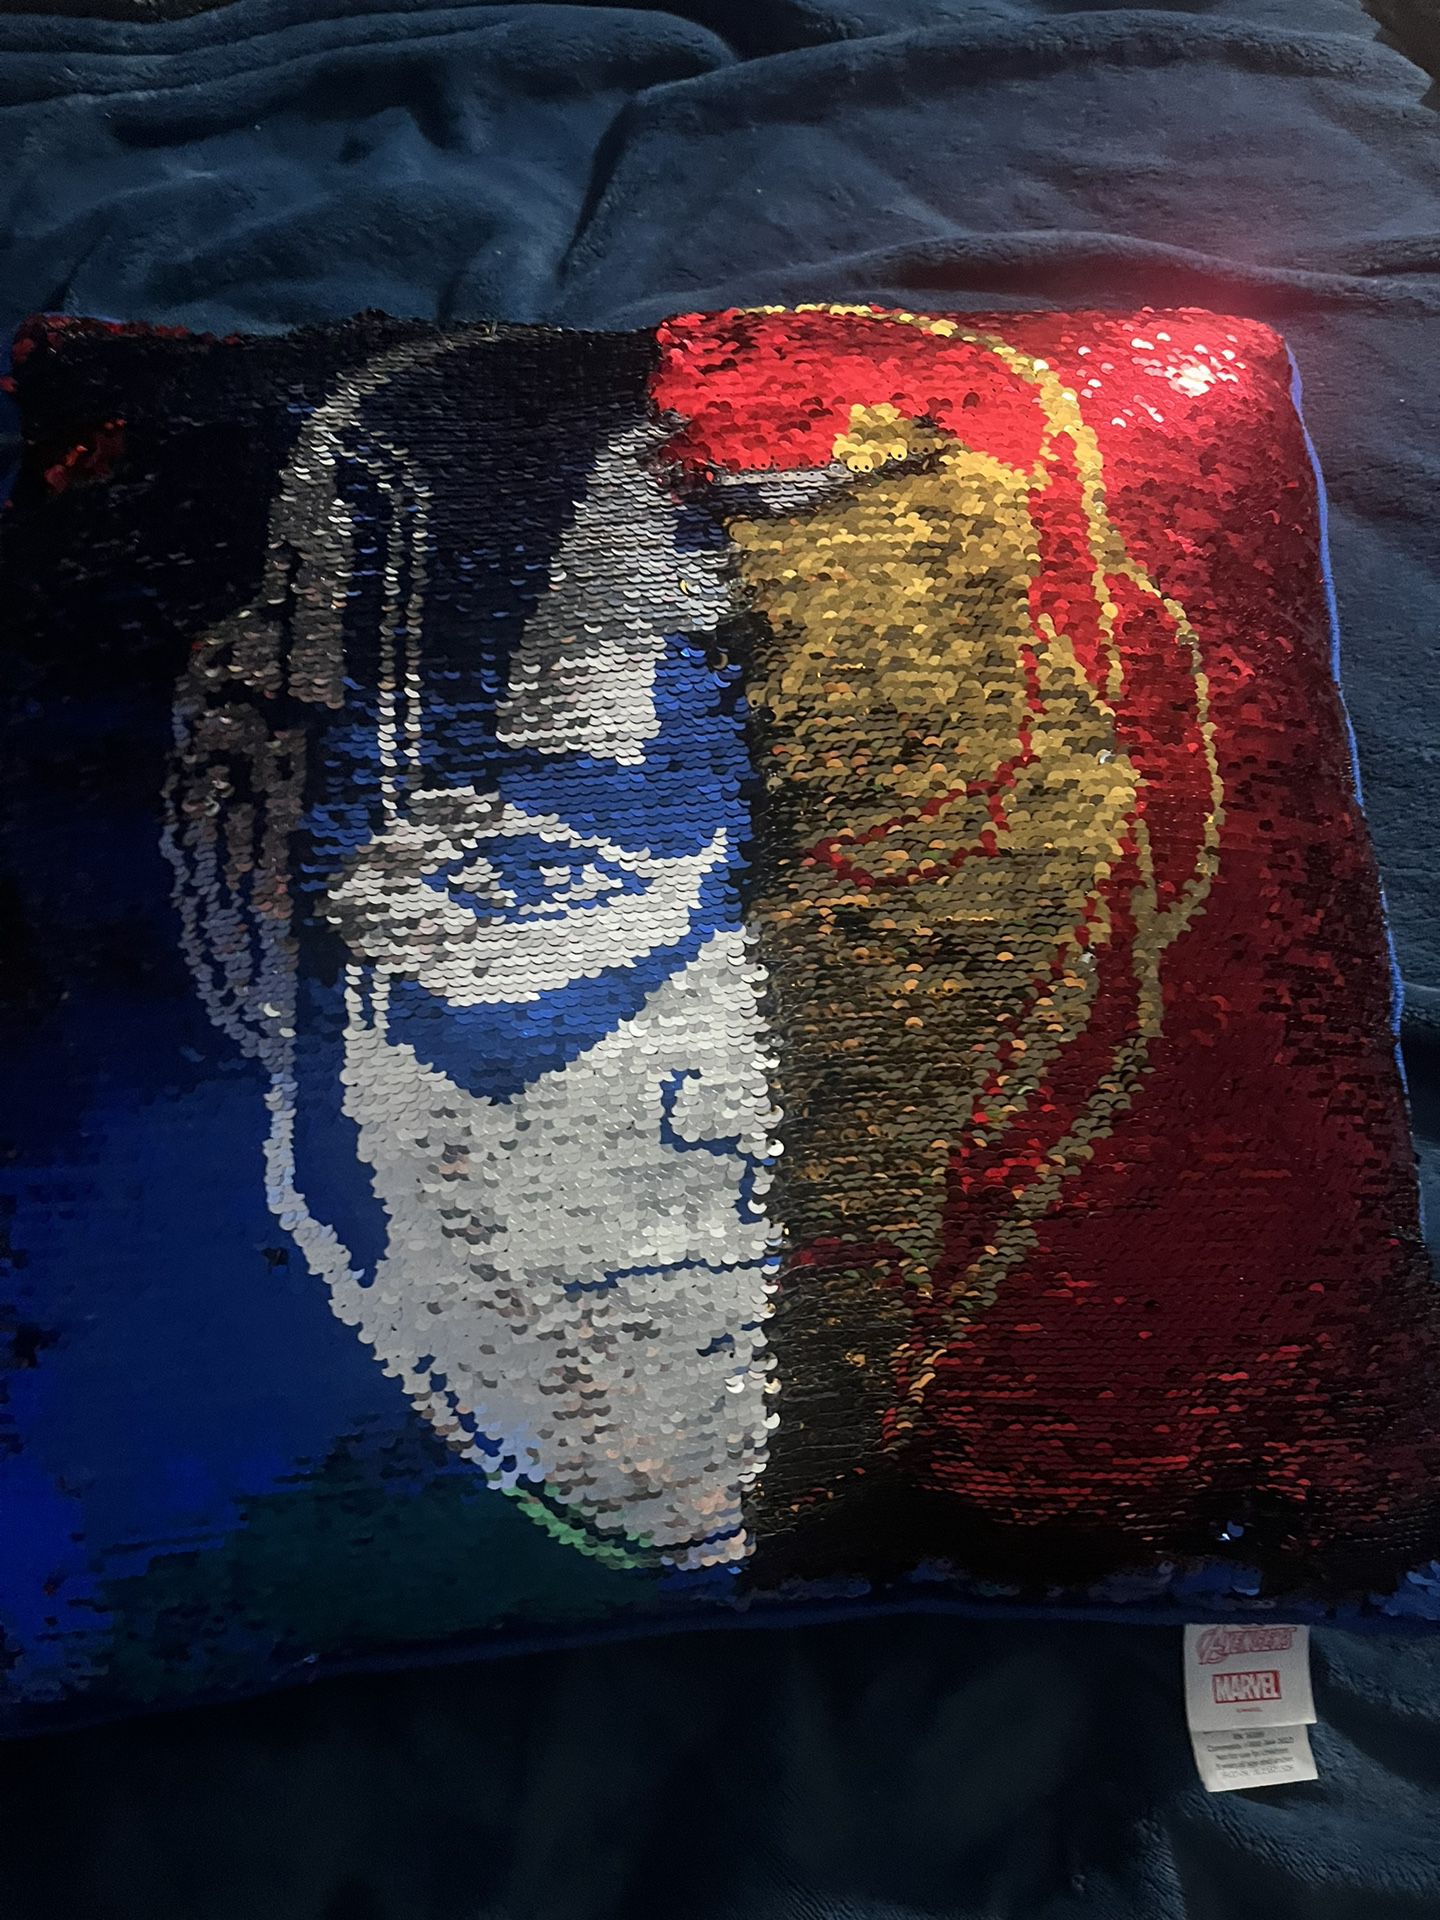 Marvel Sequin Flip Pillow Avengers Iron Man Captain America Blue/Silver/Red/Gold